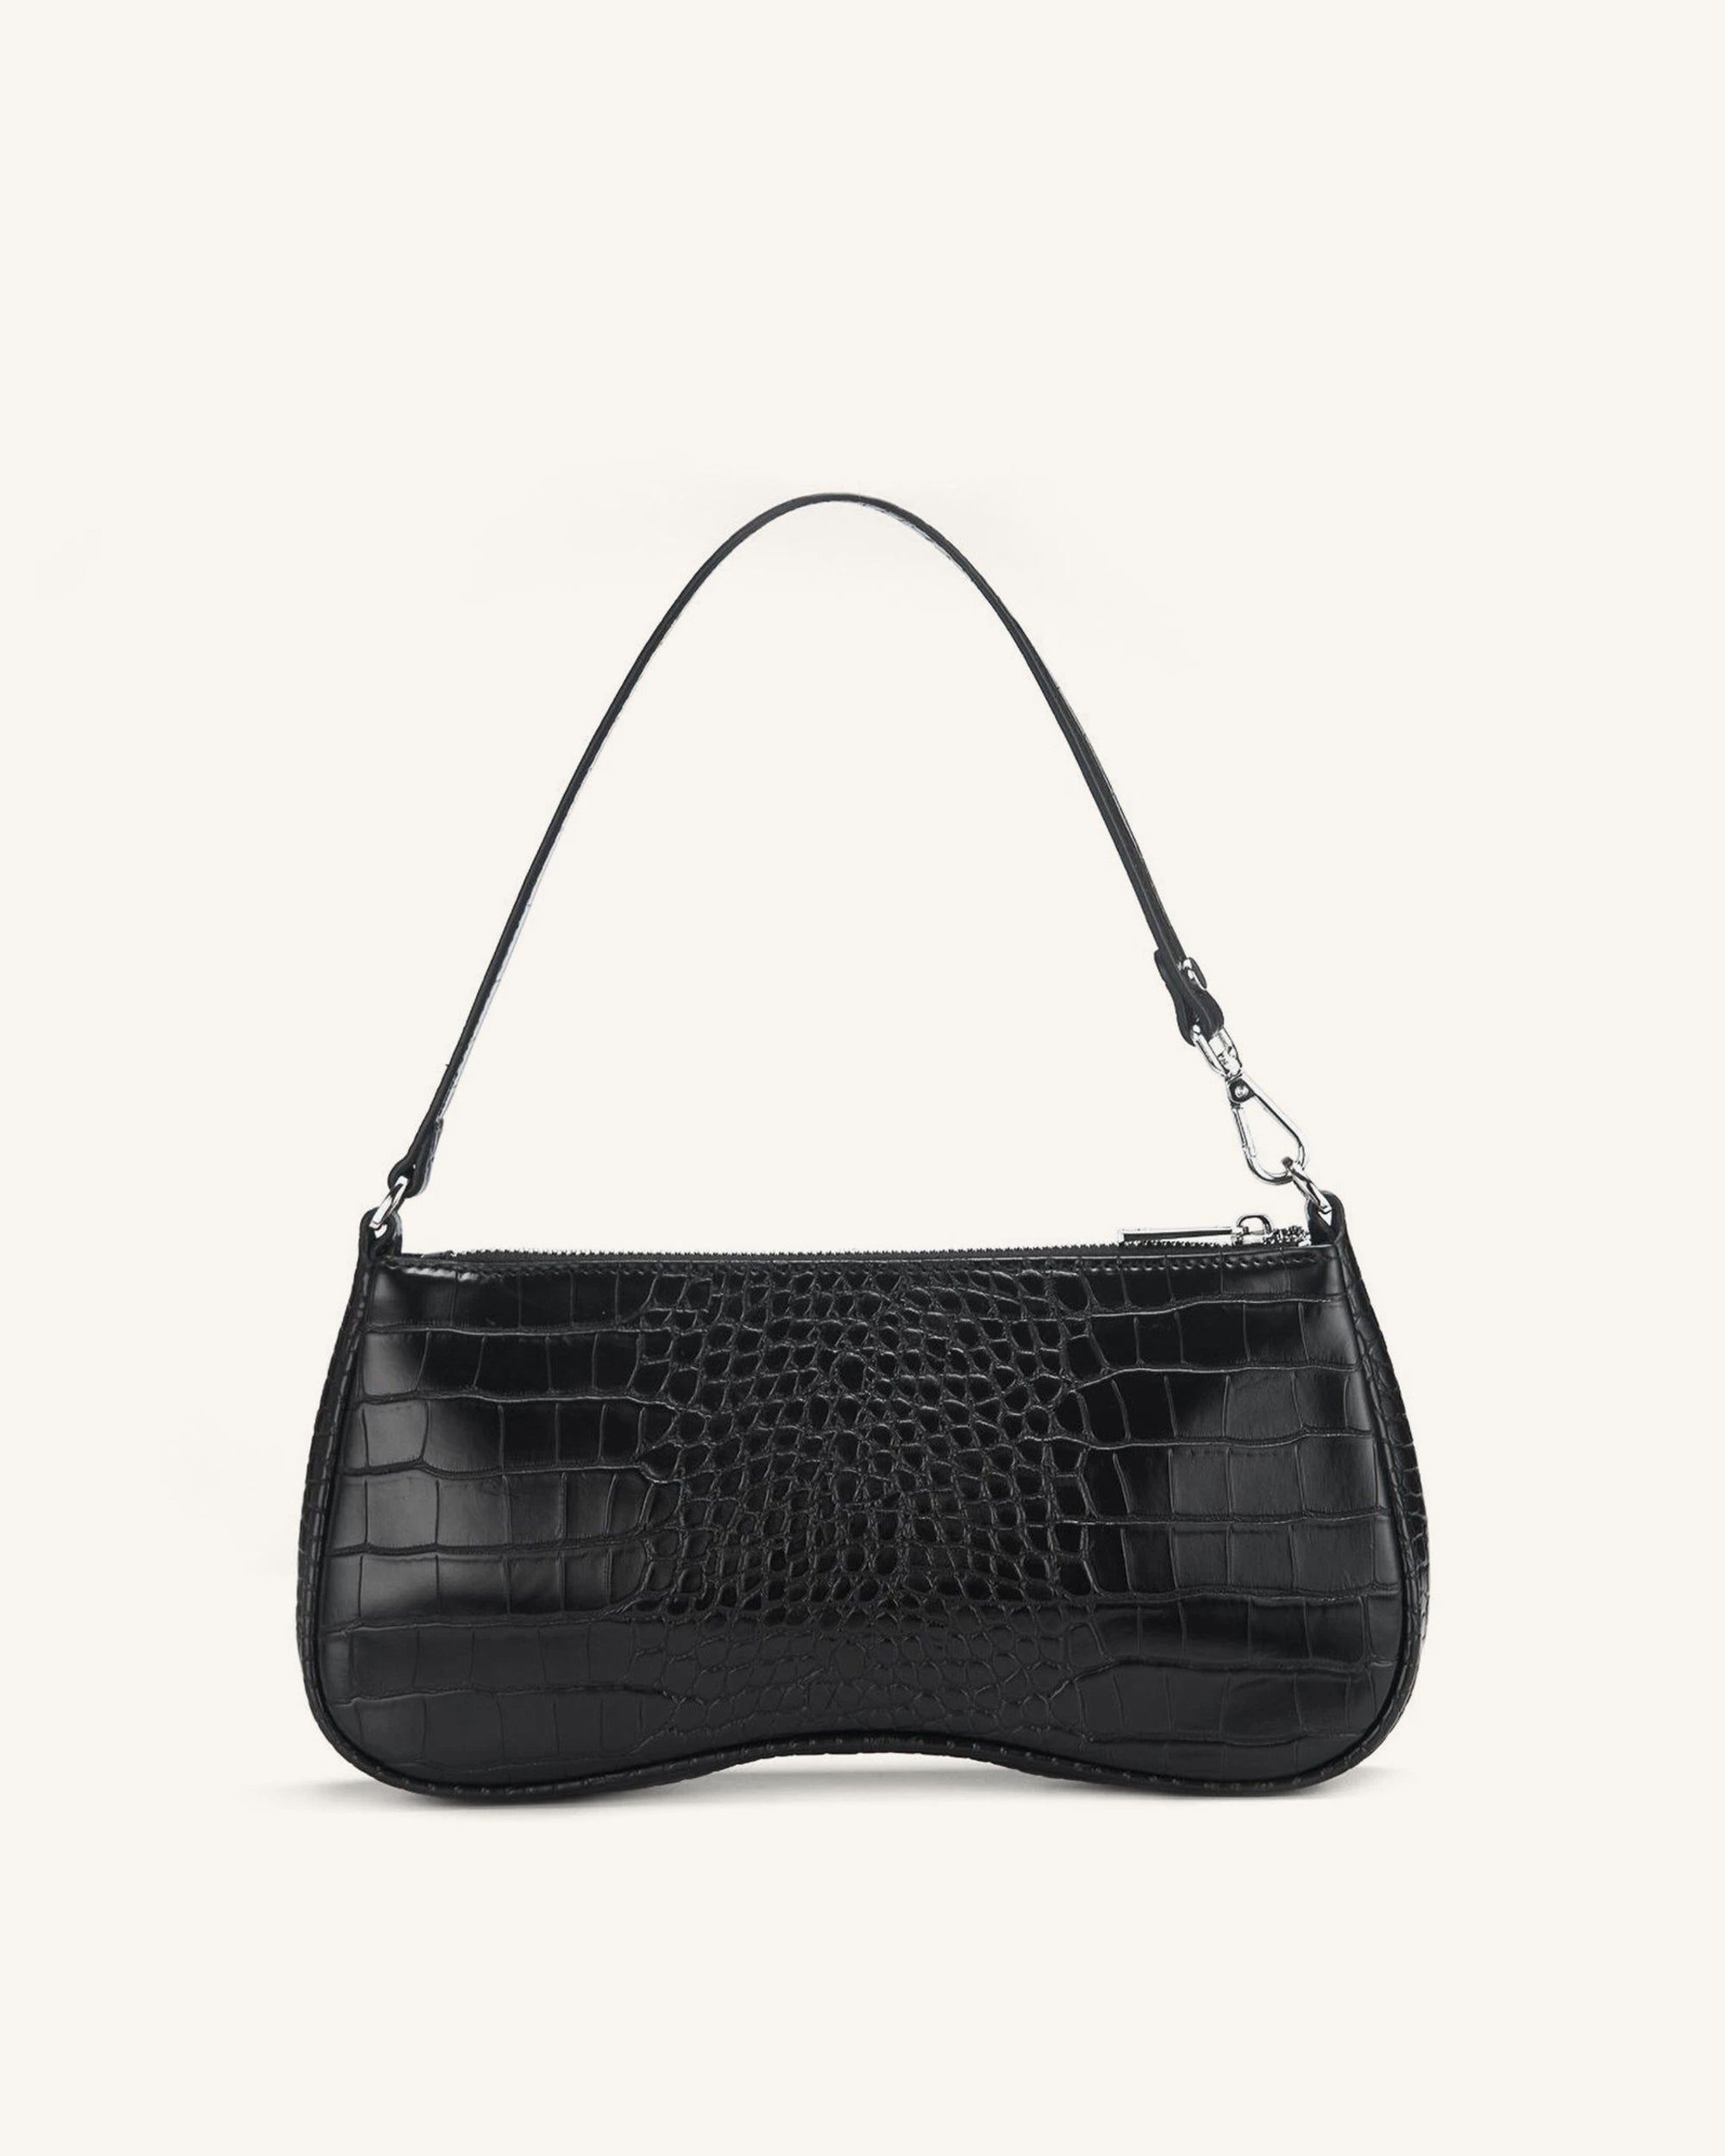 JW Pei Eva Croc Embossed Faux Leather Convertible Shoulder Bag in Black Croc